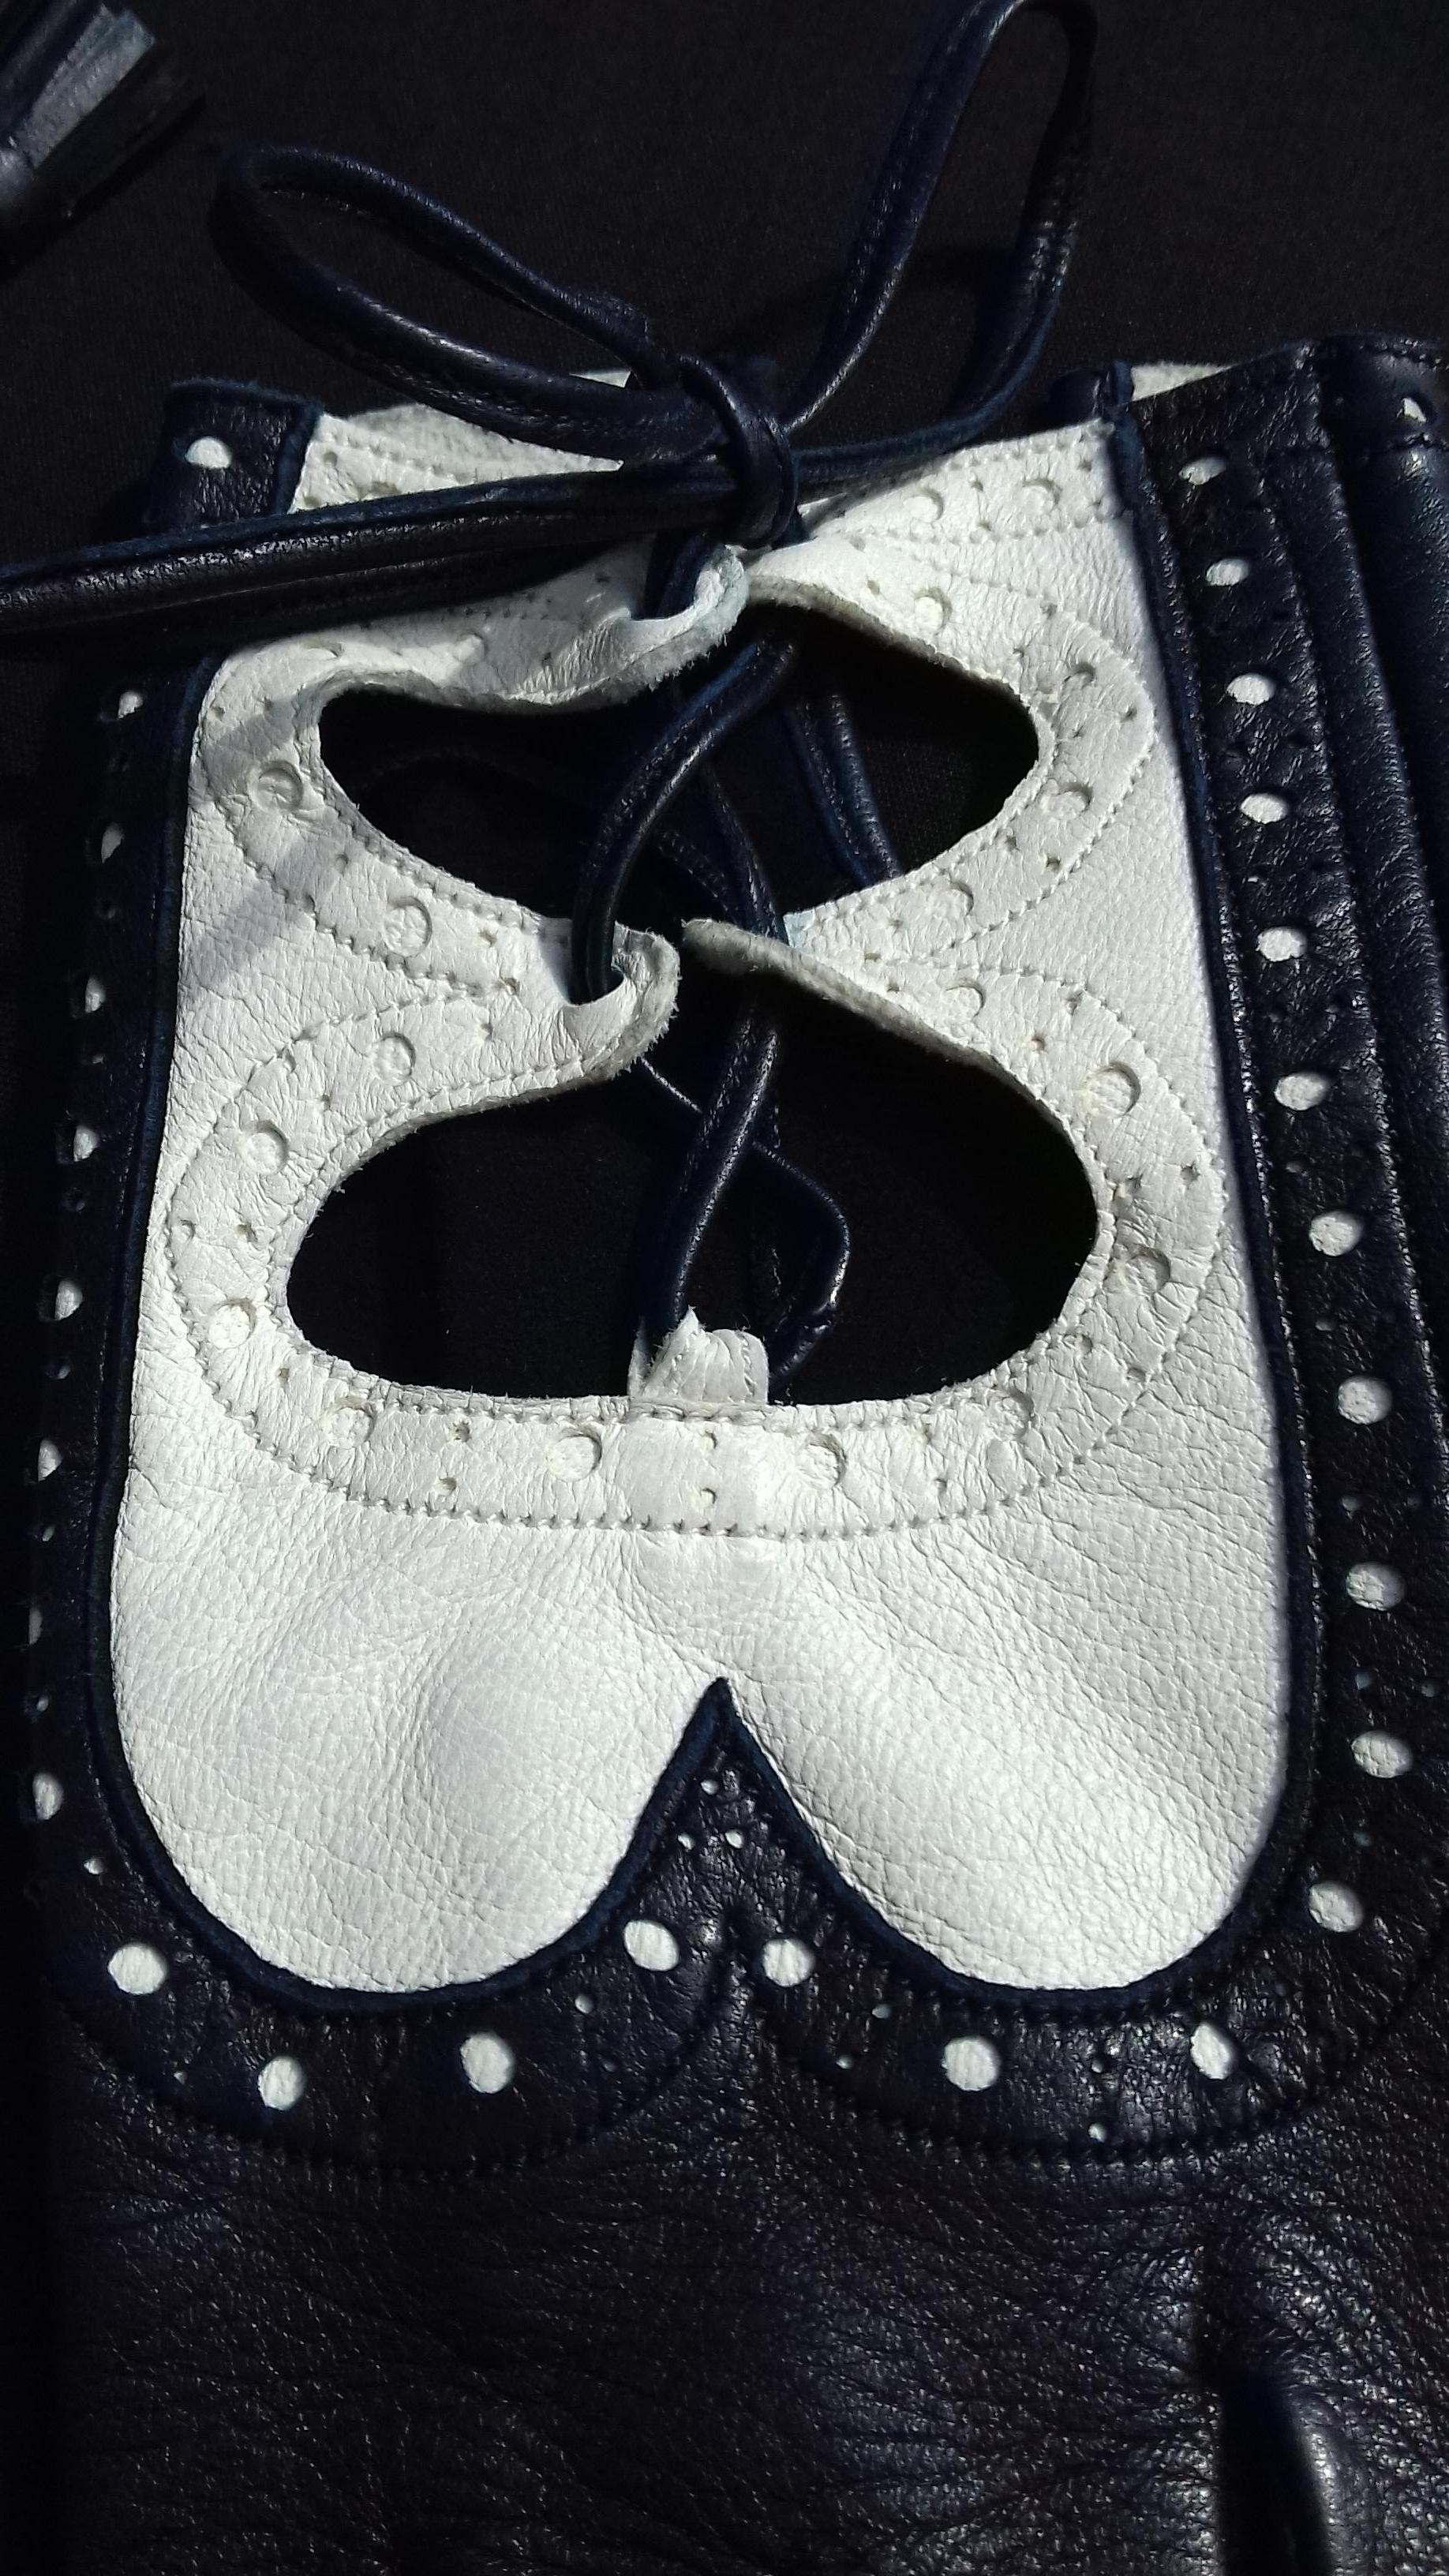 Hermès Gloves Dark Blue and White Leather Gloves Ghillies Size 6/7 6